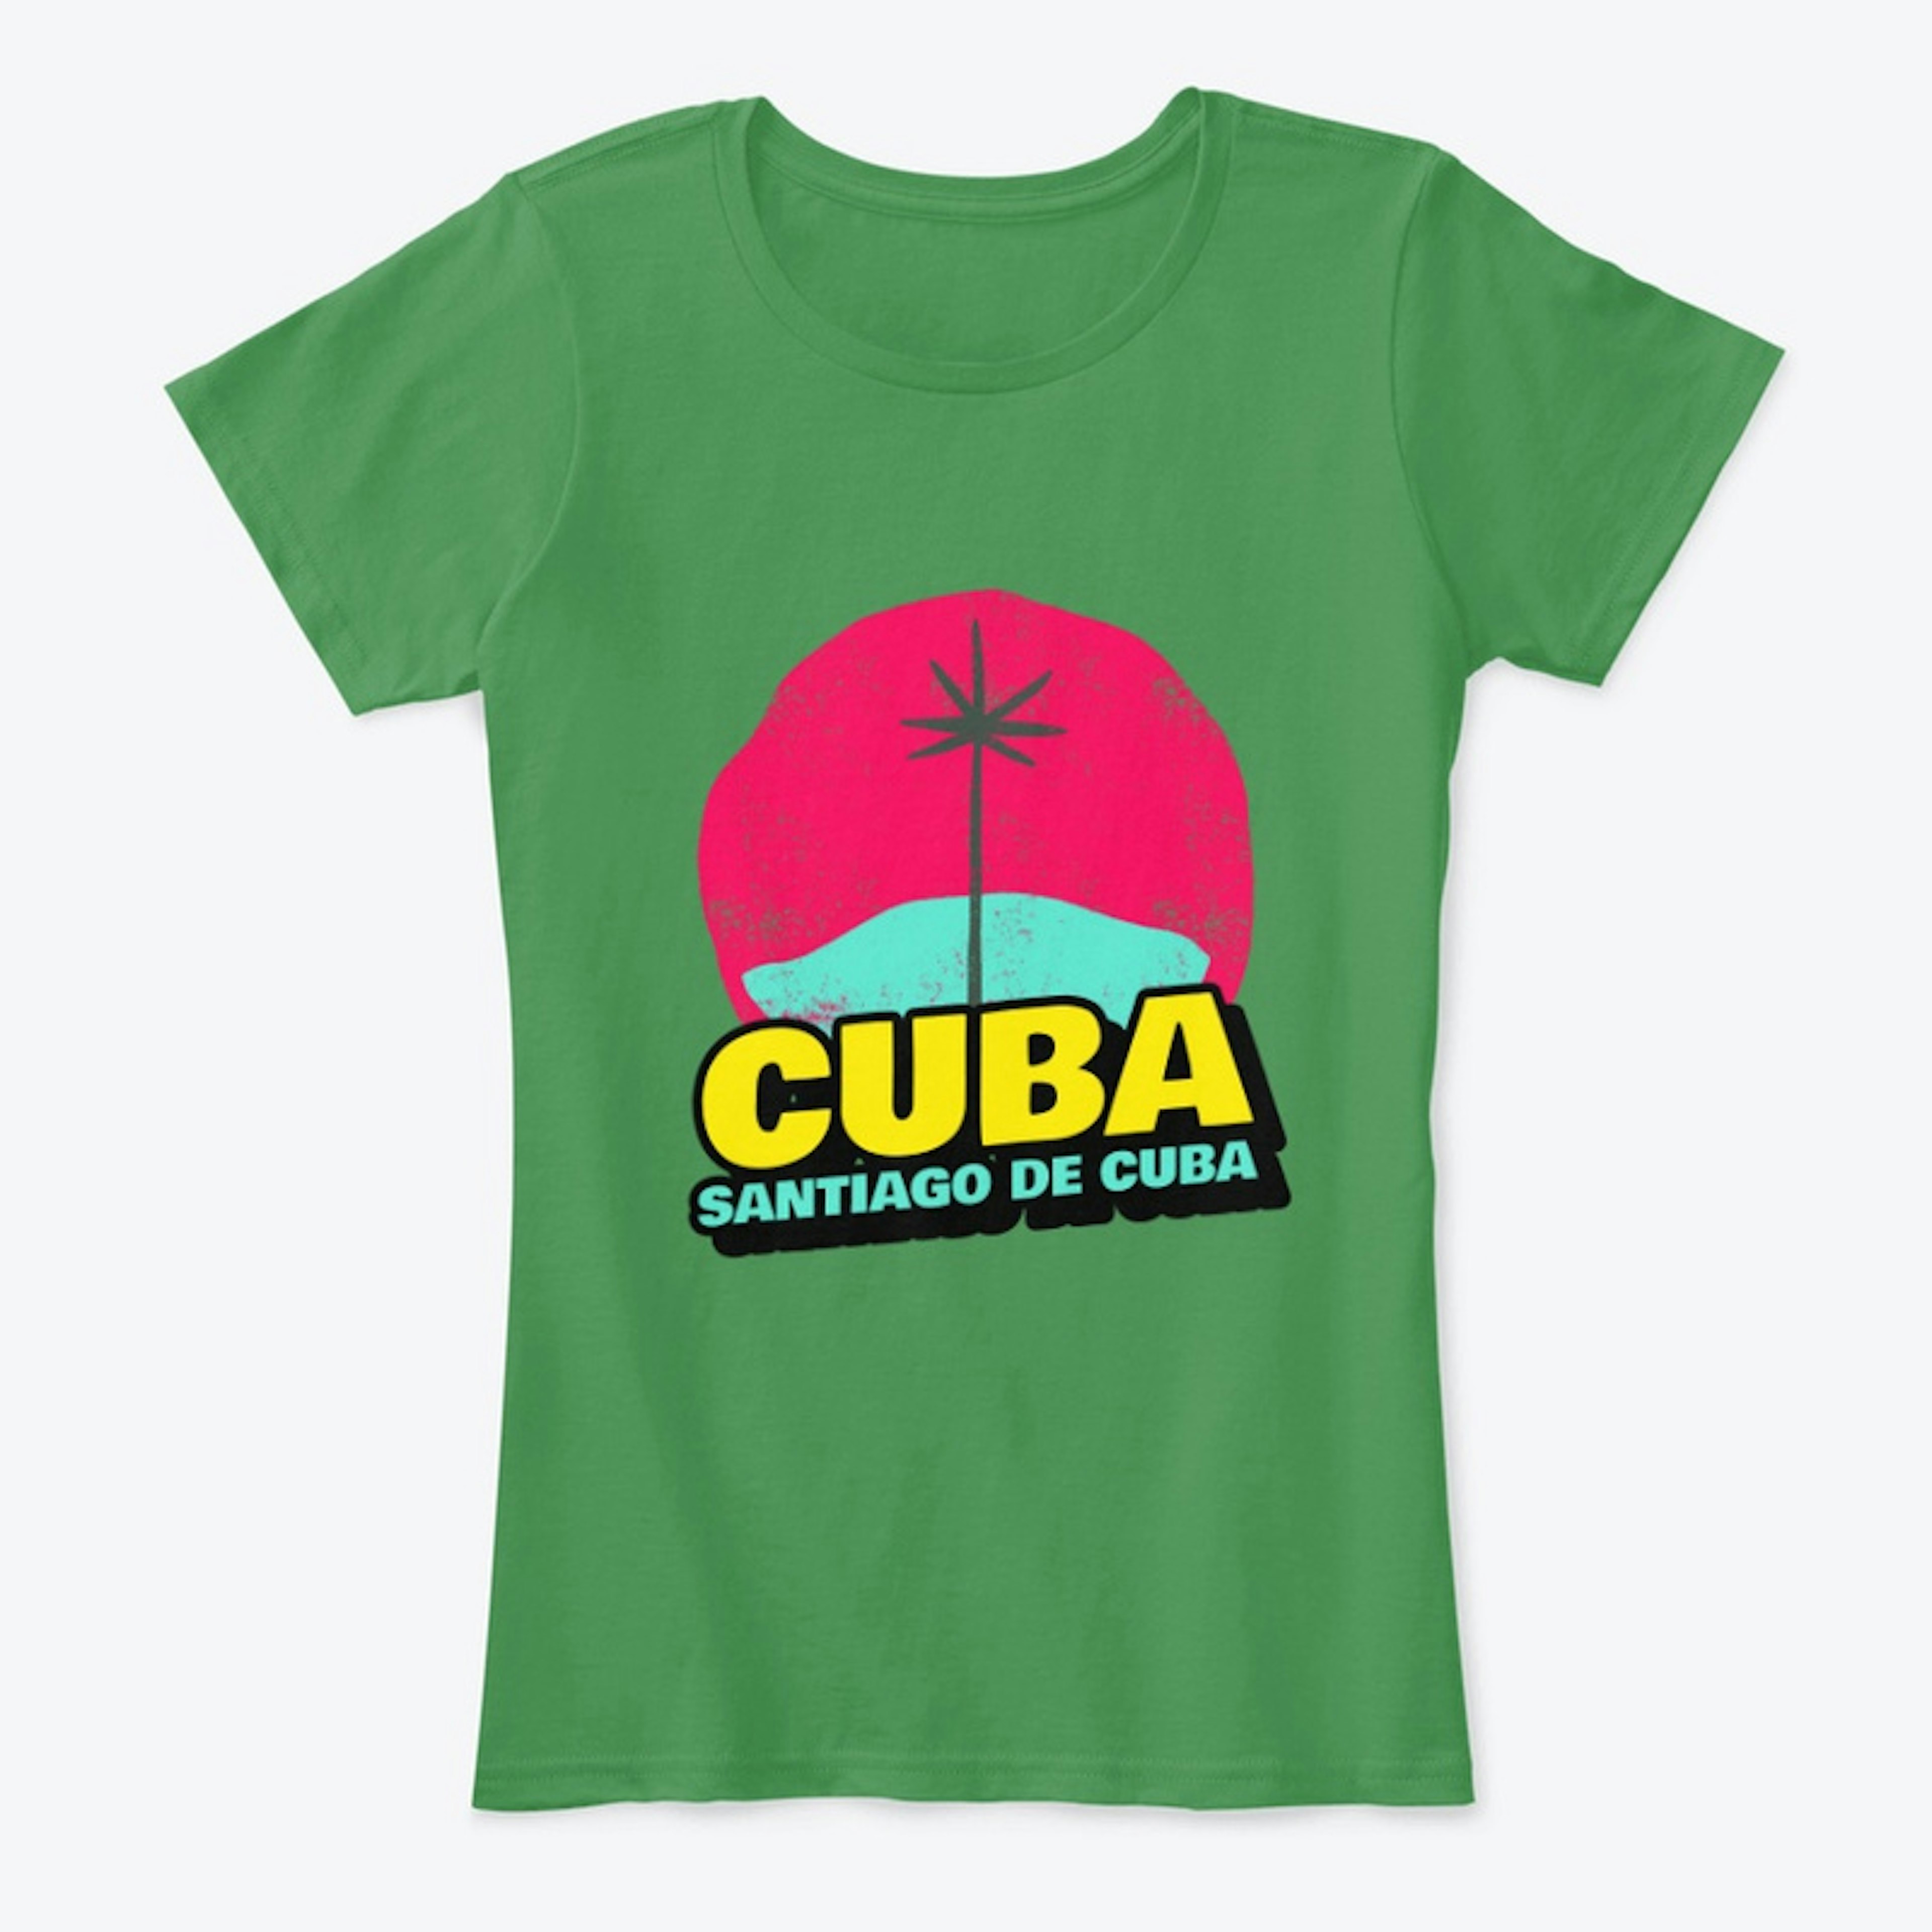 SANTIAGO DE CUBA, CUBA